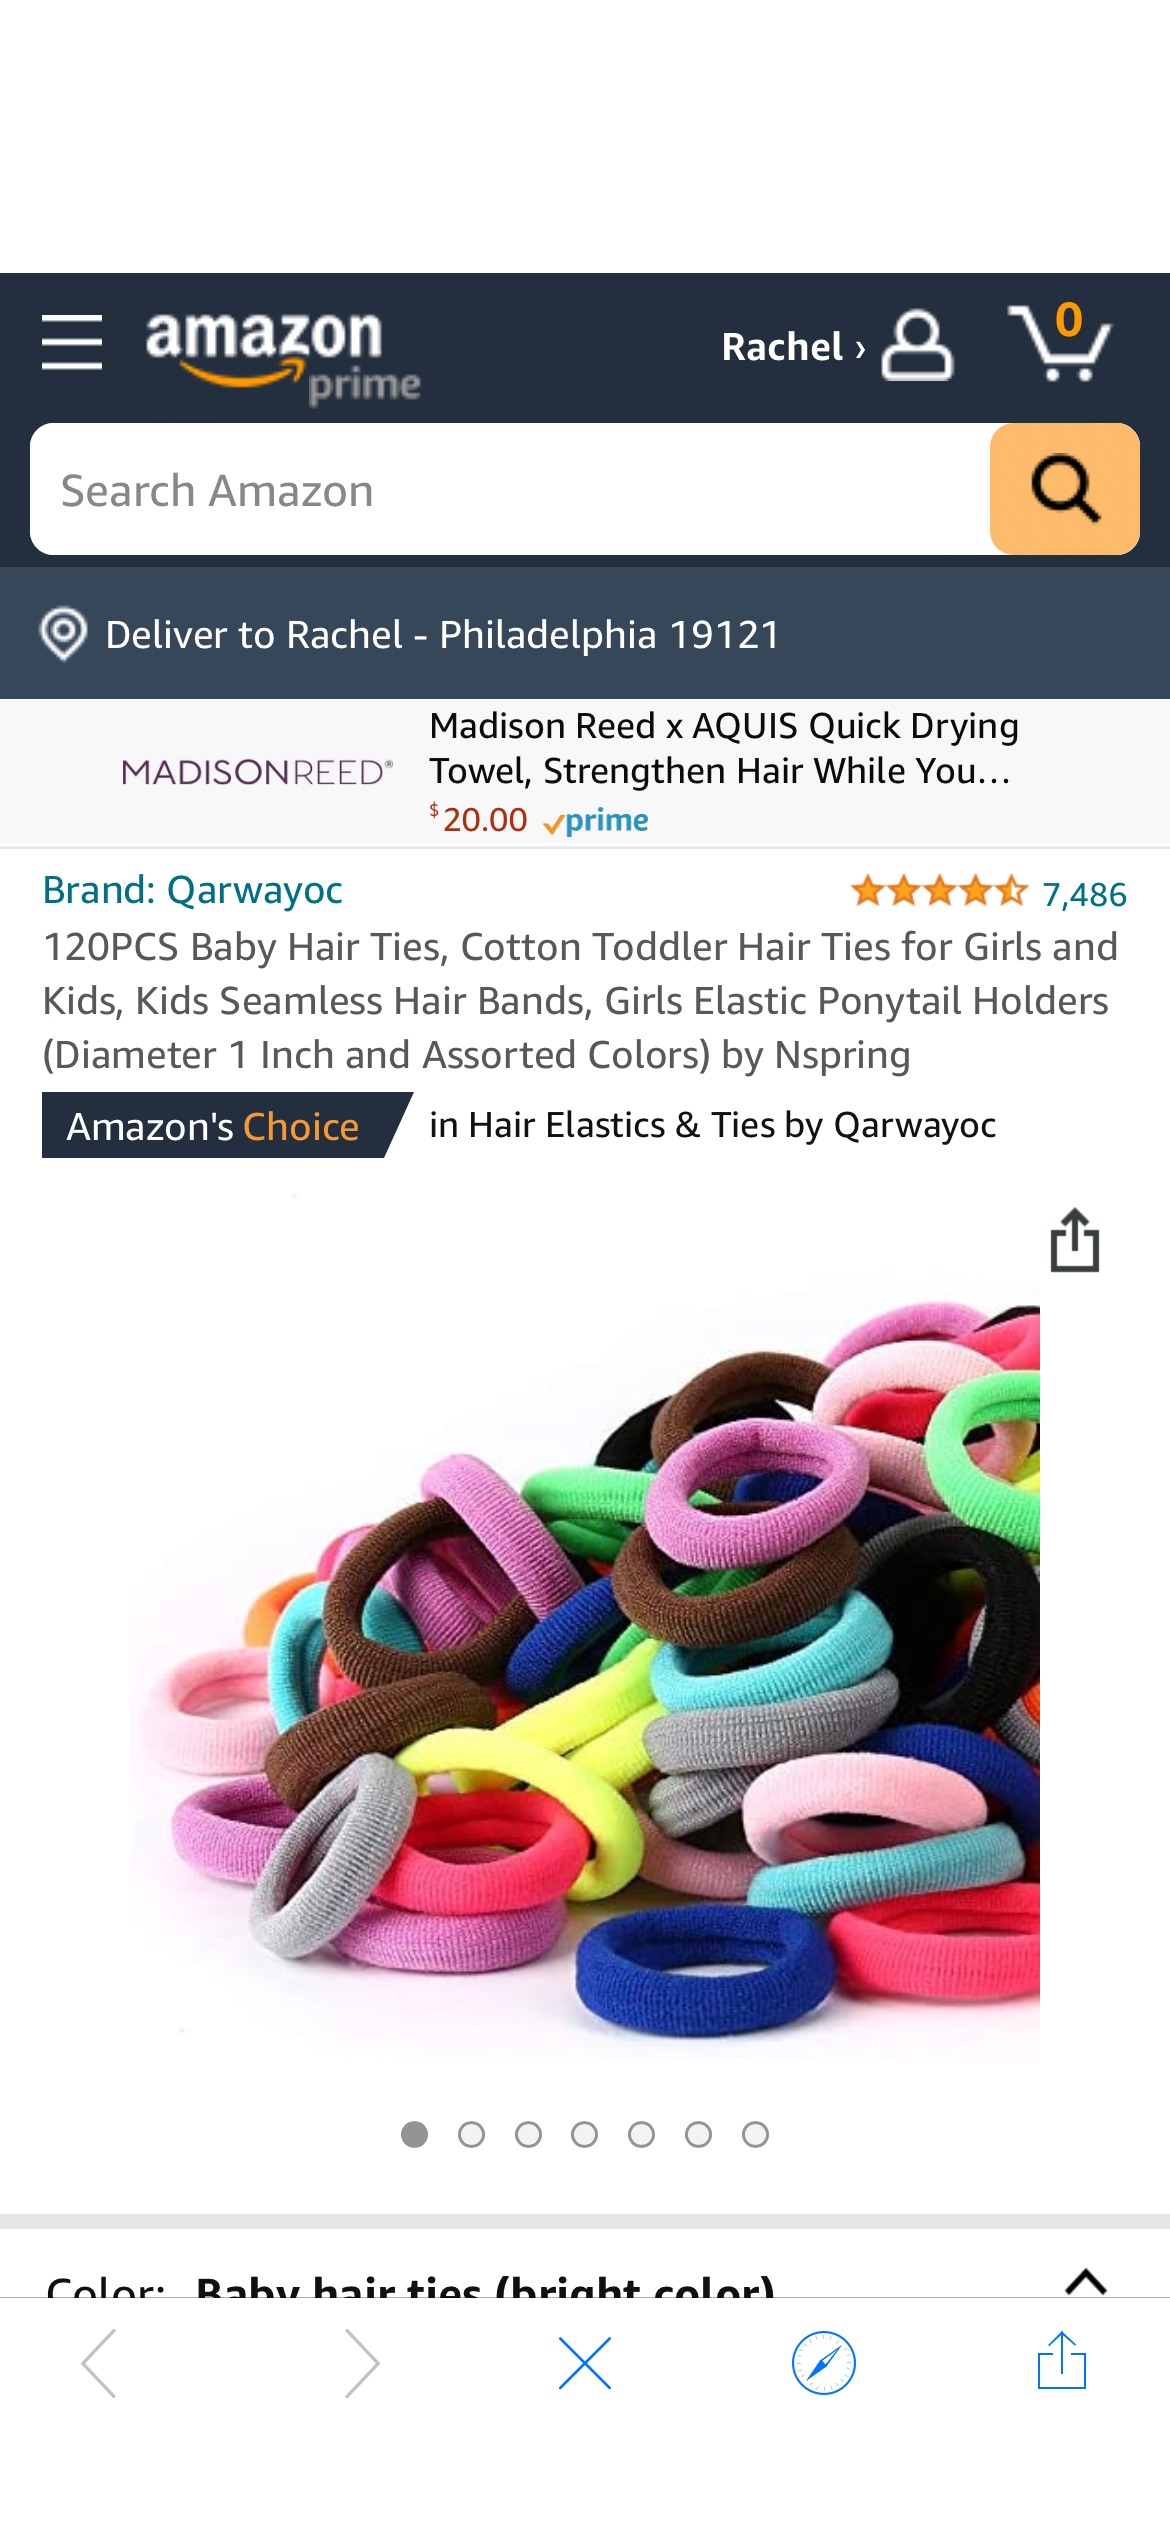 Amazon.com : 120PCS Baby Hair Ties, Cotton Toddler Hair Ties for Girls and Kids, Kids Seamless Hair Bands, Girls Elastic Ponytail